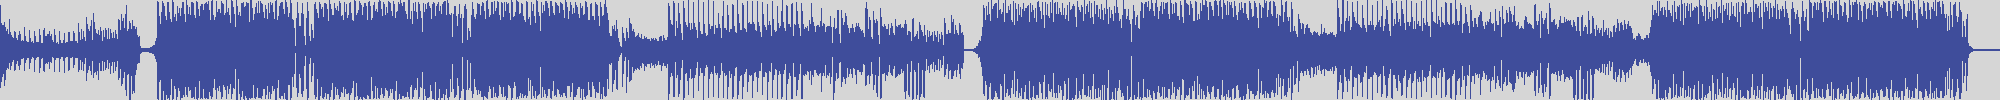 nf_boyz_records [NFY074] Hokasa Toro - Build up Drop [A.i. Beats Mix] audio wave form